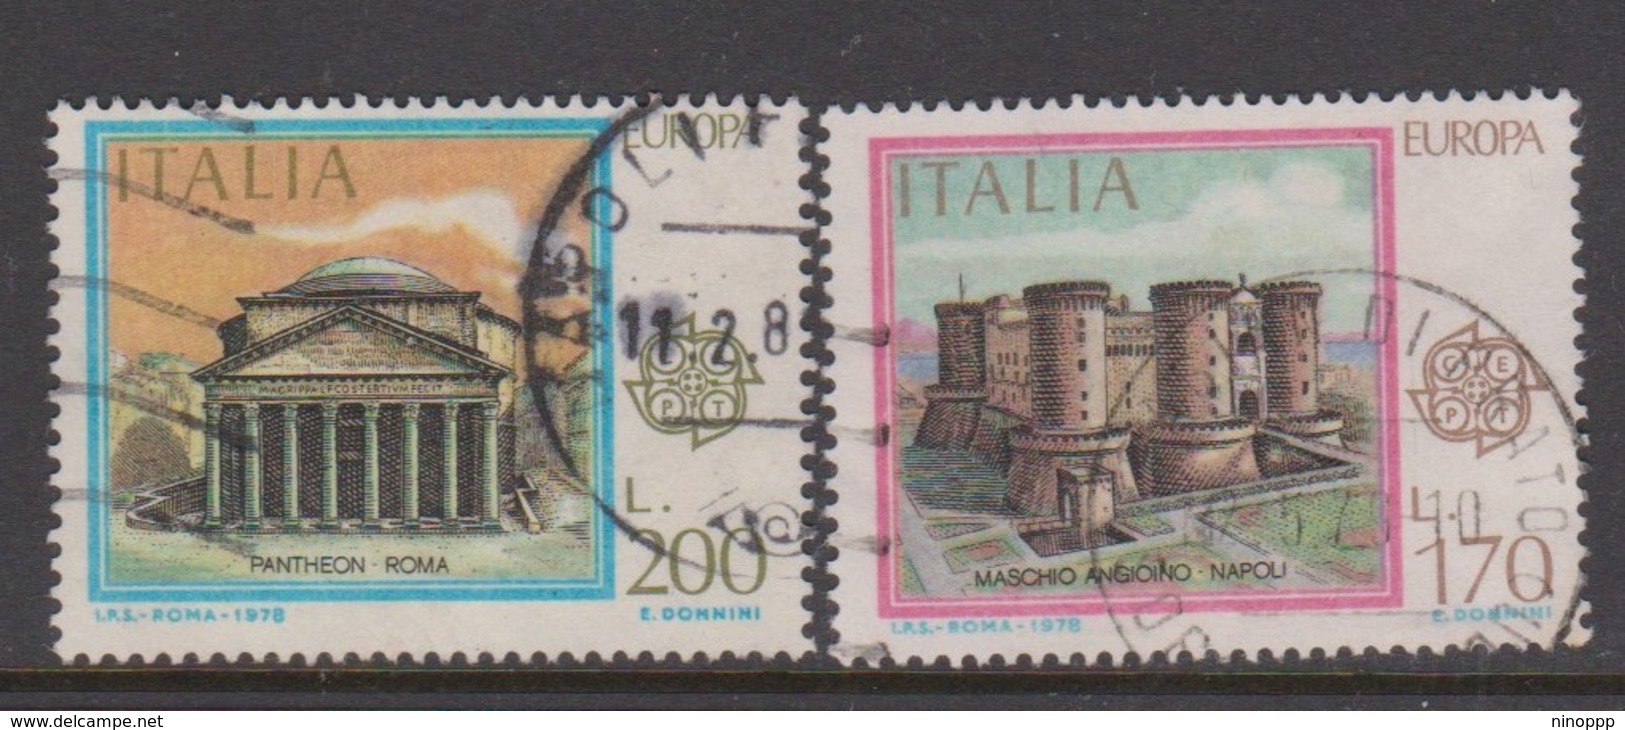 Italy Republic S 1410-1411 1978 Europa ,used - 1971-80: Used